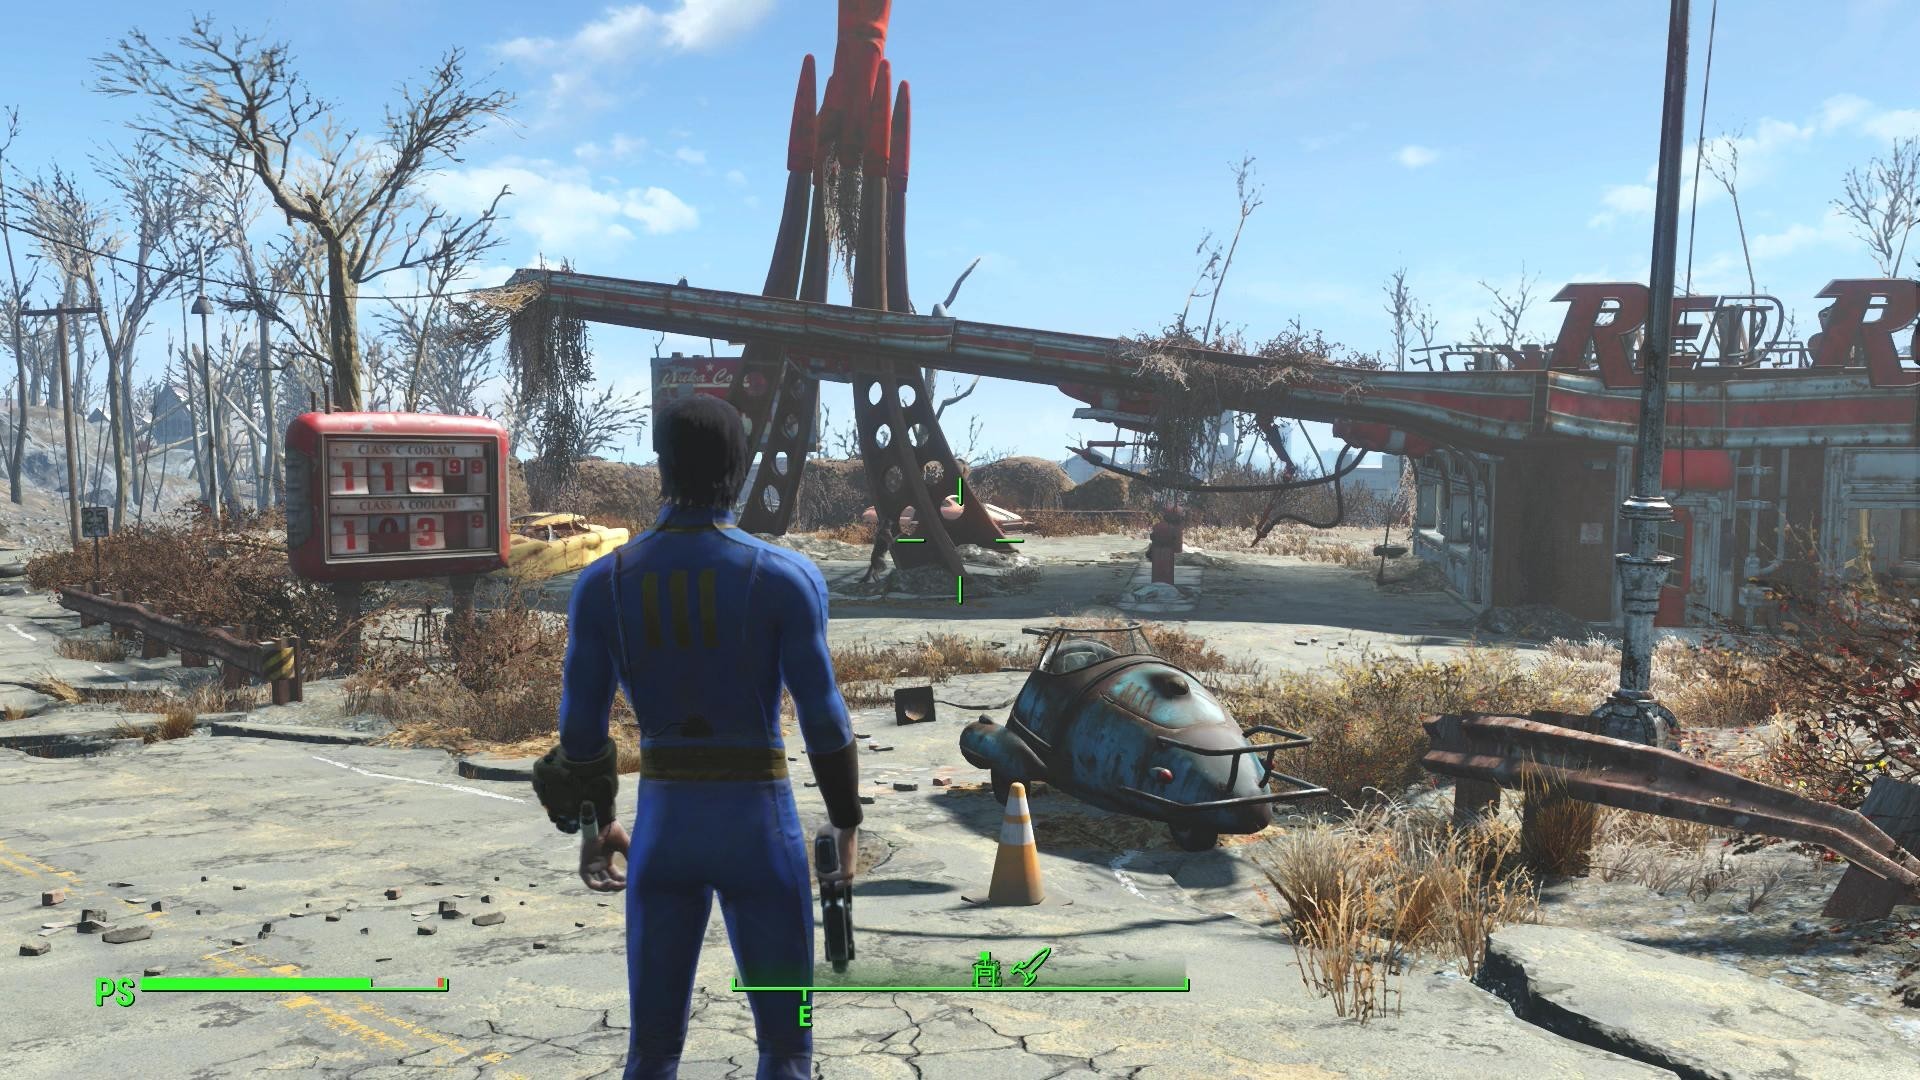 Fallout 4 01